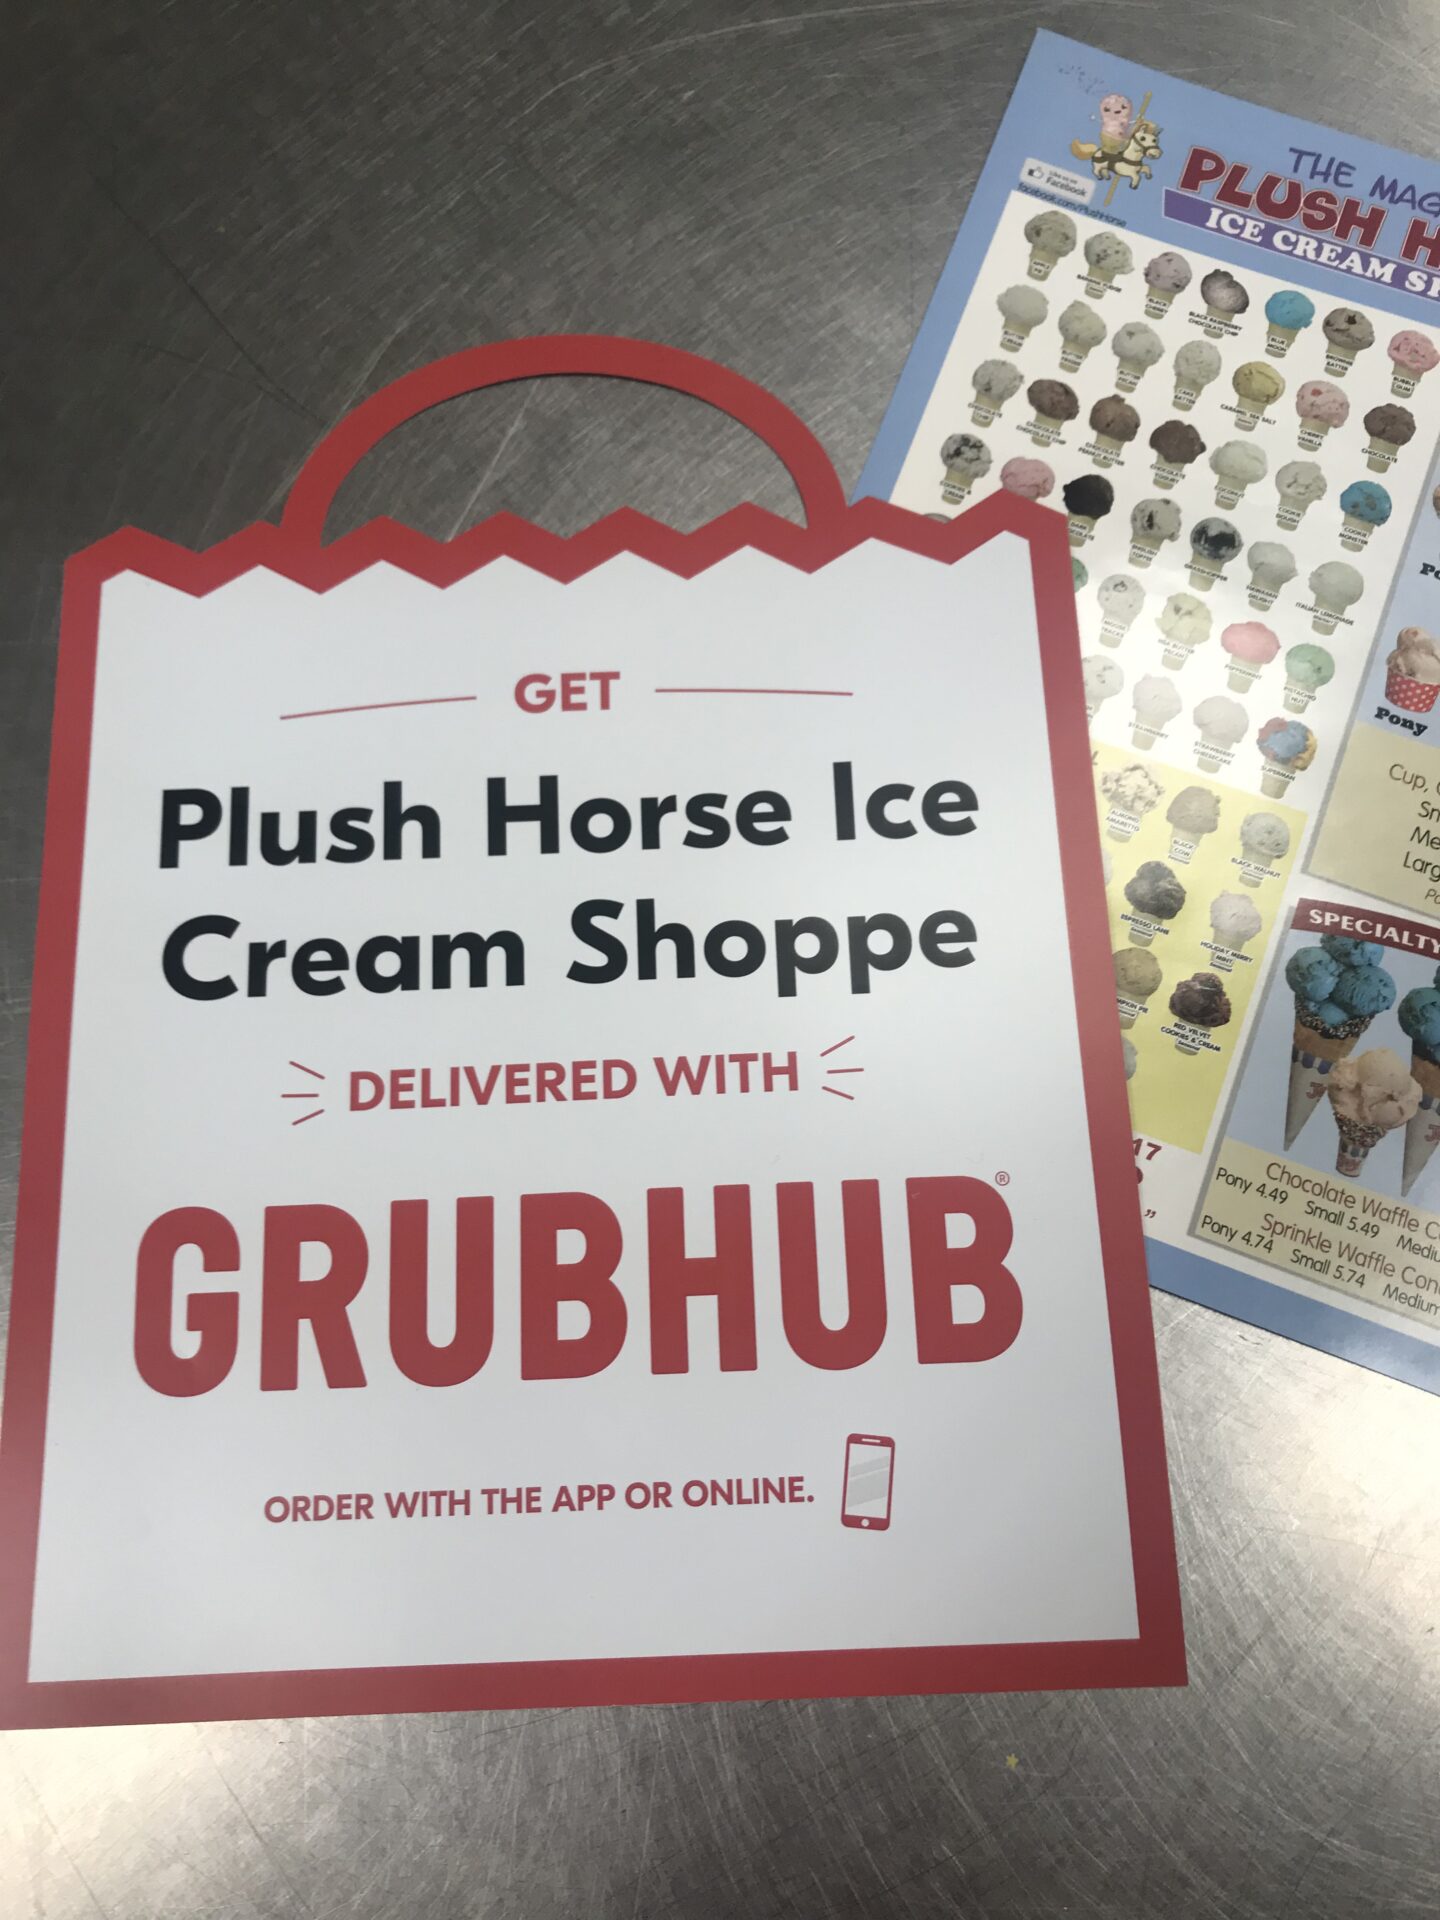 Plush Horse Ice Cream Shoppe poster and menu